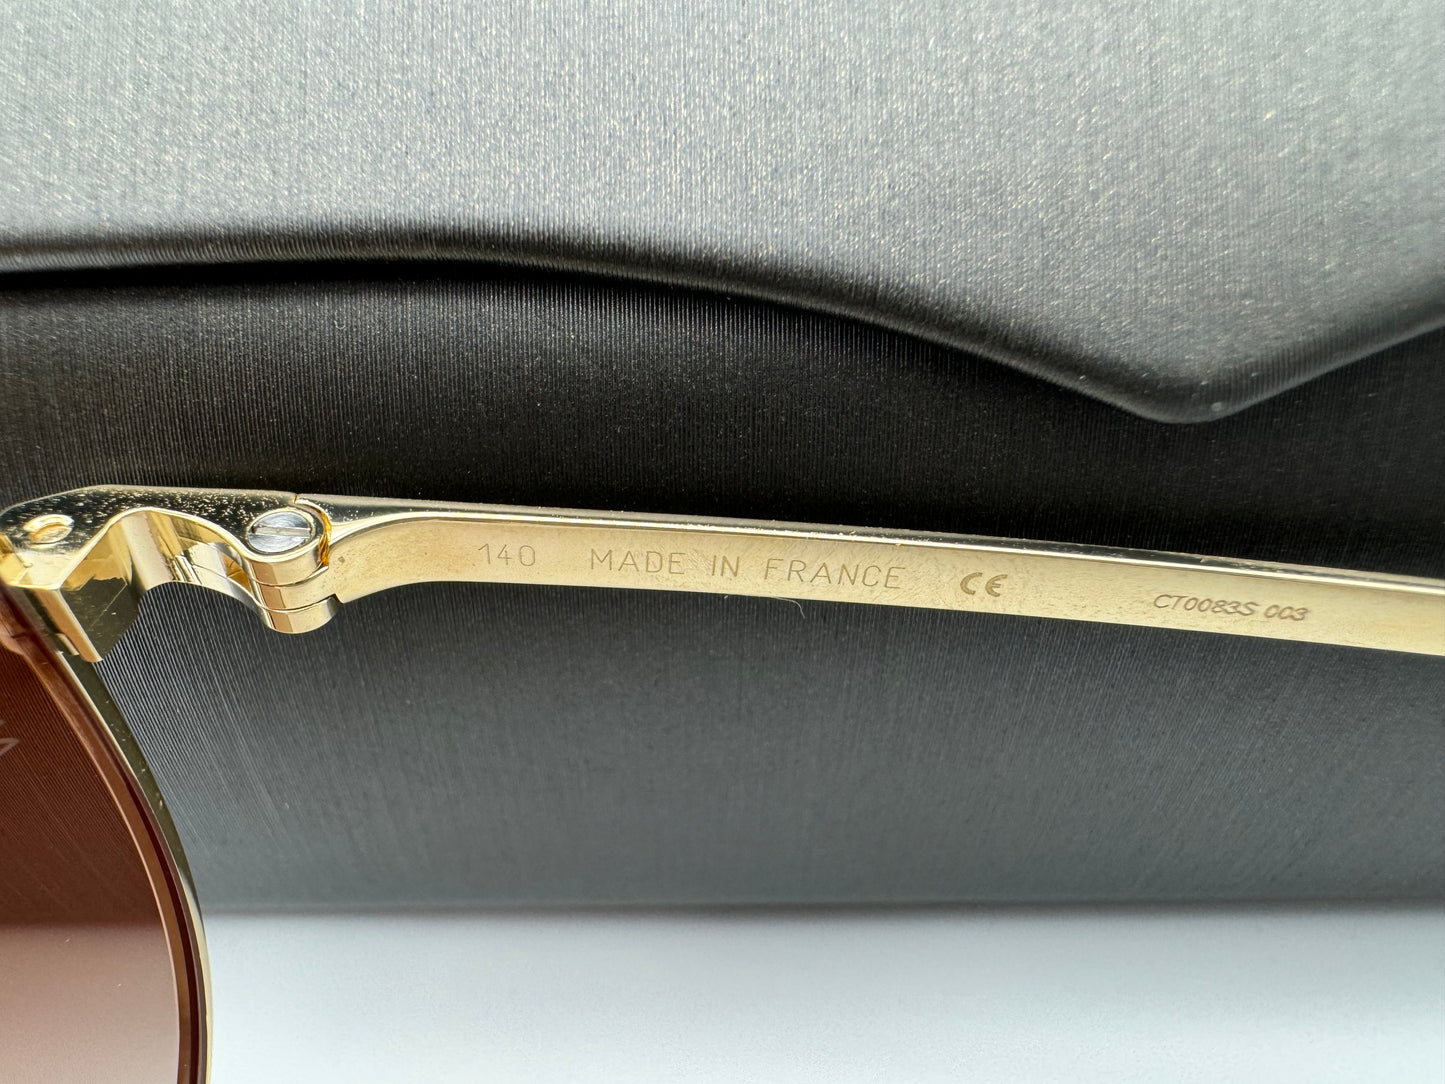 Cartier Aviator 61mm Polarized Sunglasses Brown Pilot Gold Metal Sunglasses CT 0083S 003